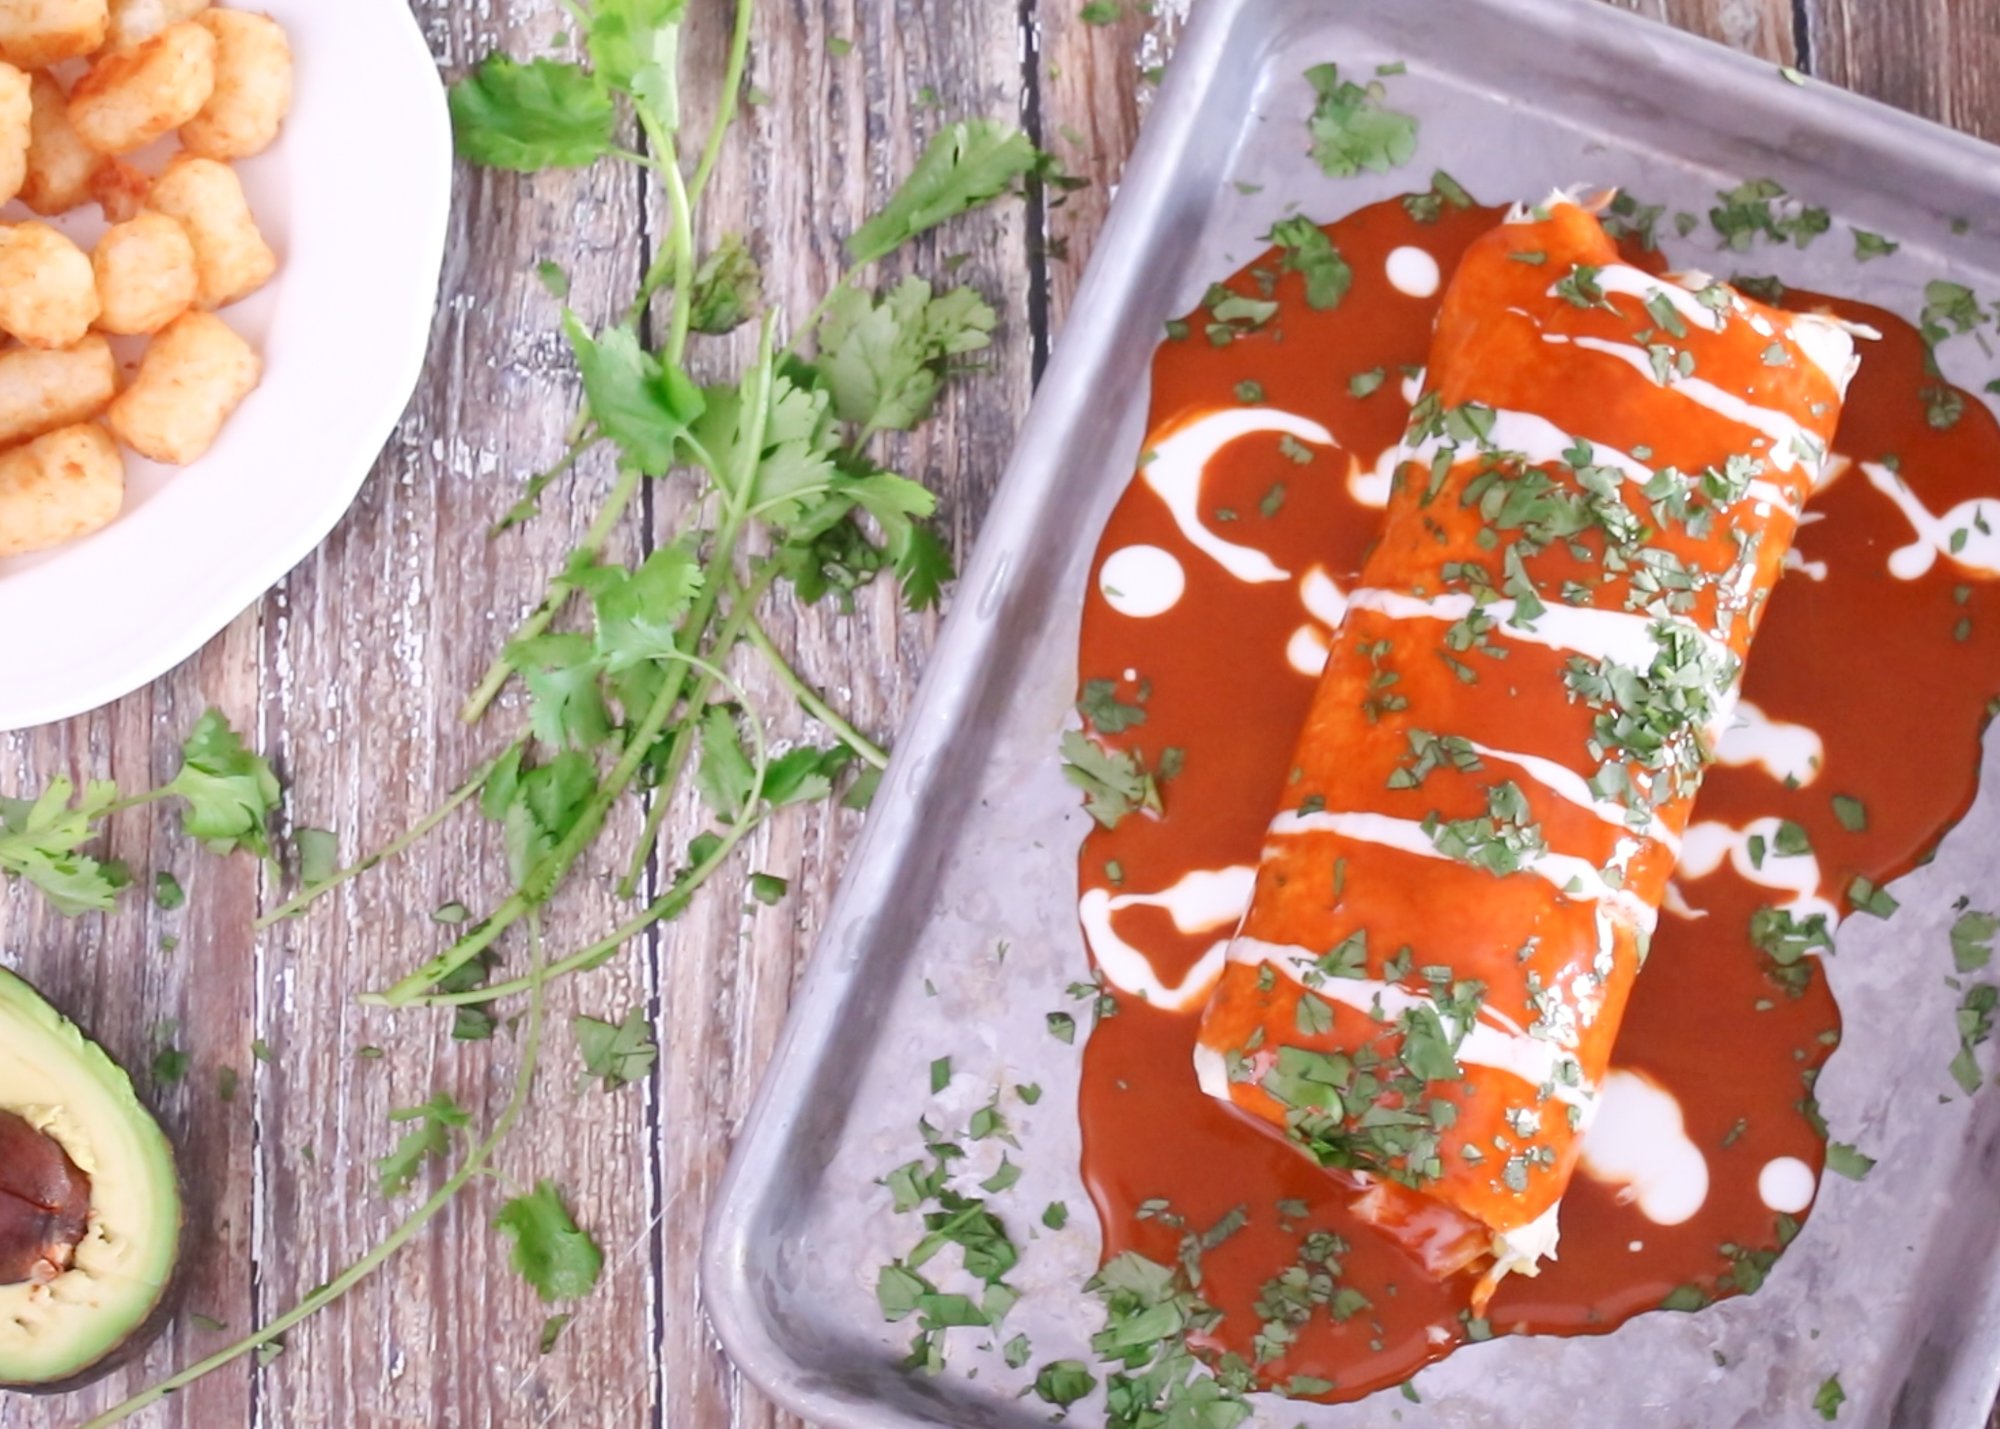 Spinach & Egg Breakfast Burrito (Vegan) Video - pink